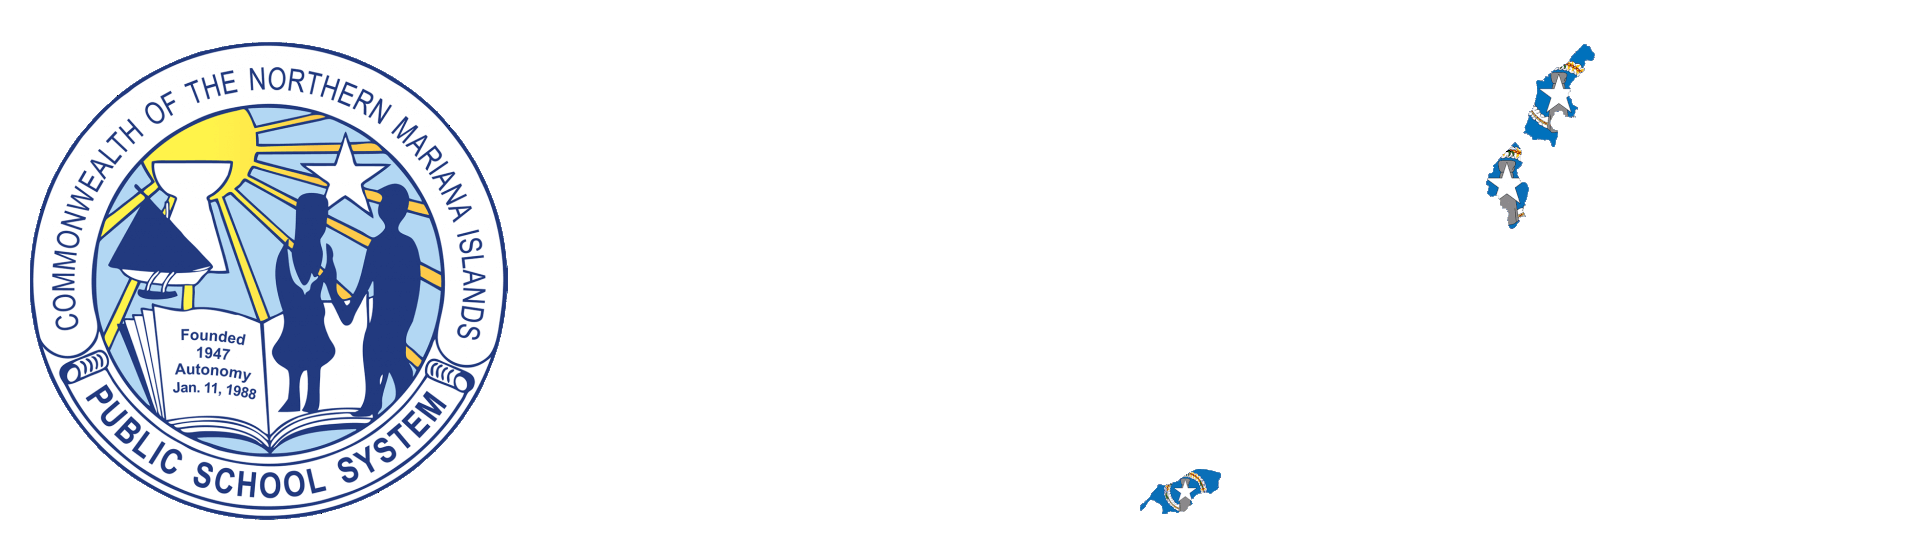 CNMI PSS logo